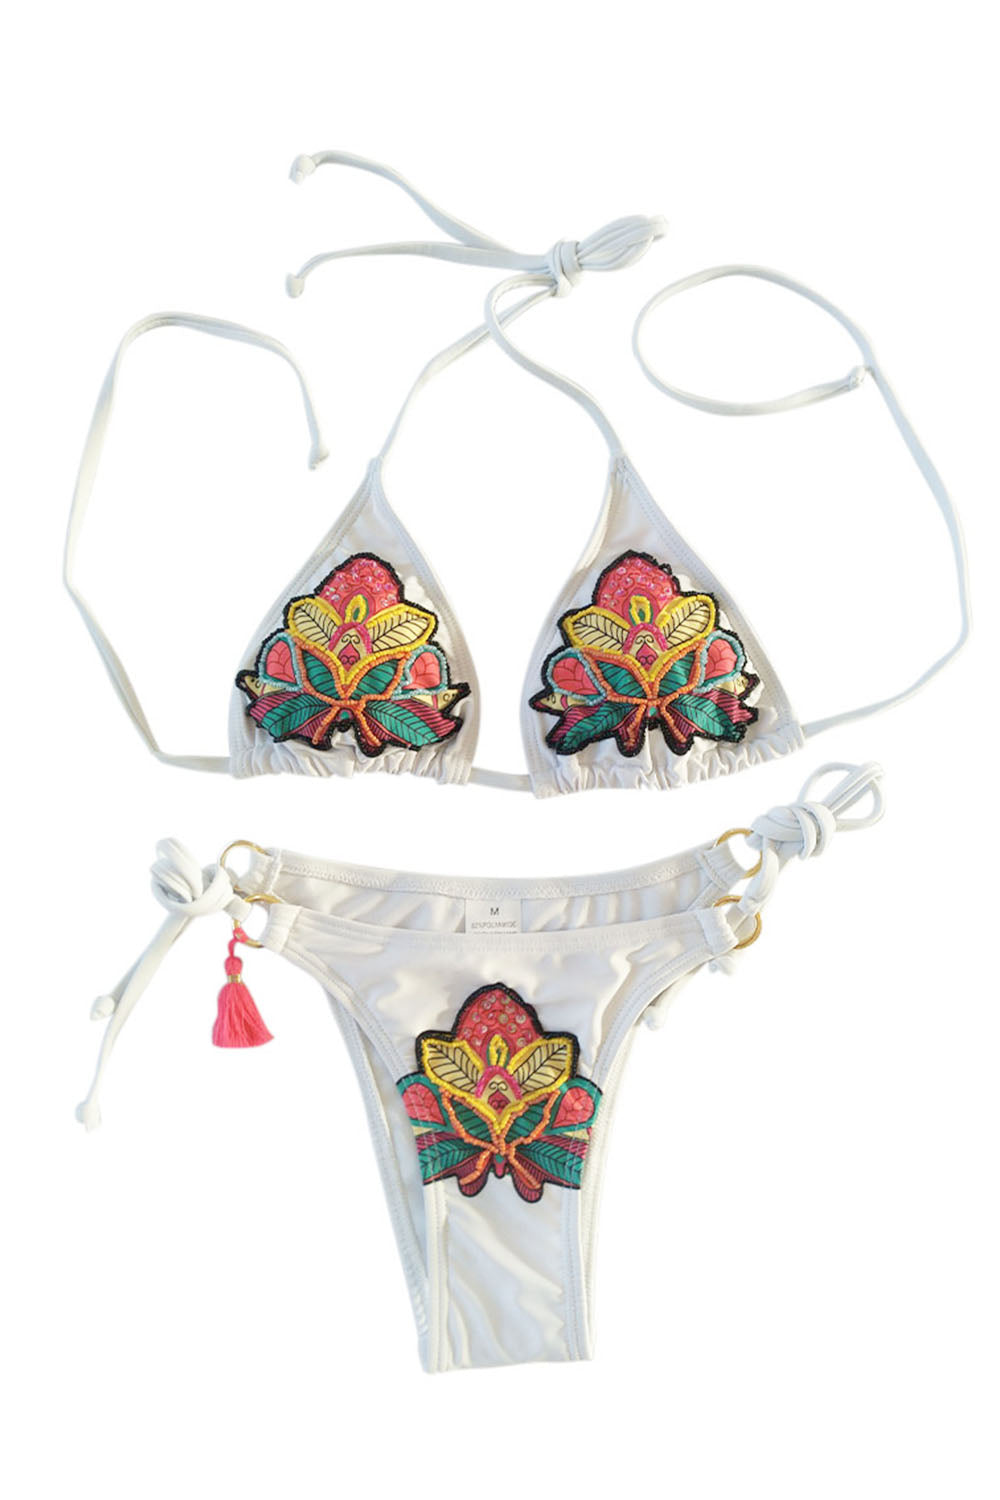 Iyasson Halter Neck Boho Floral Applique Two-piece Bikini Set